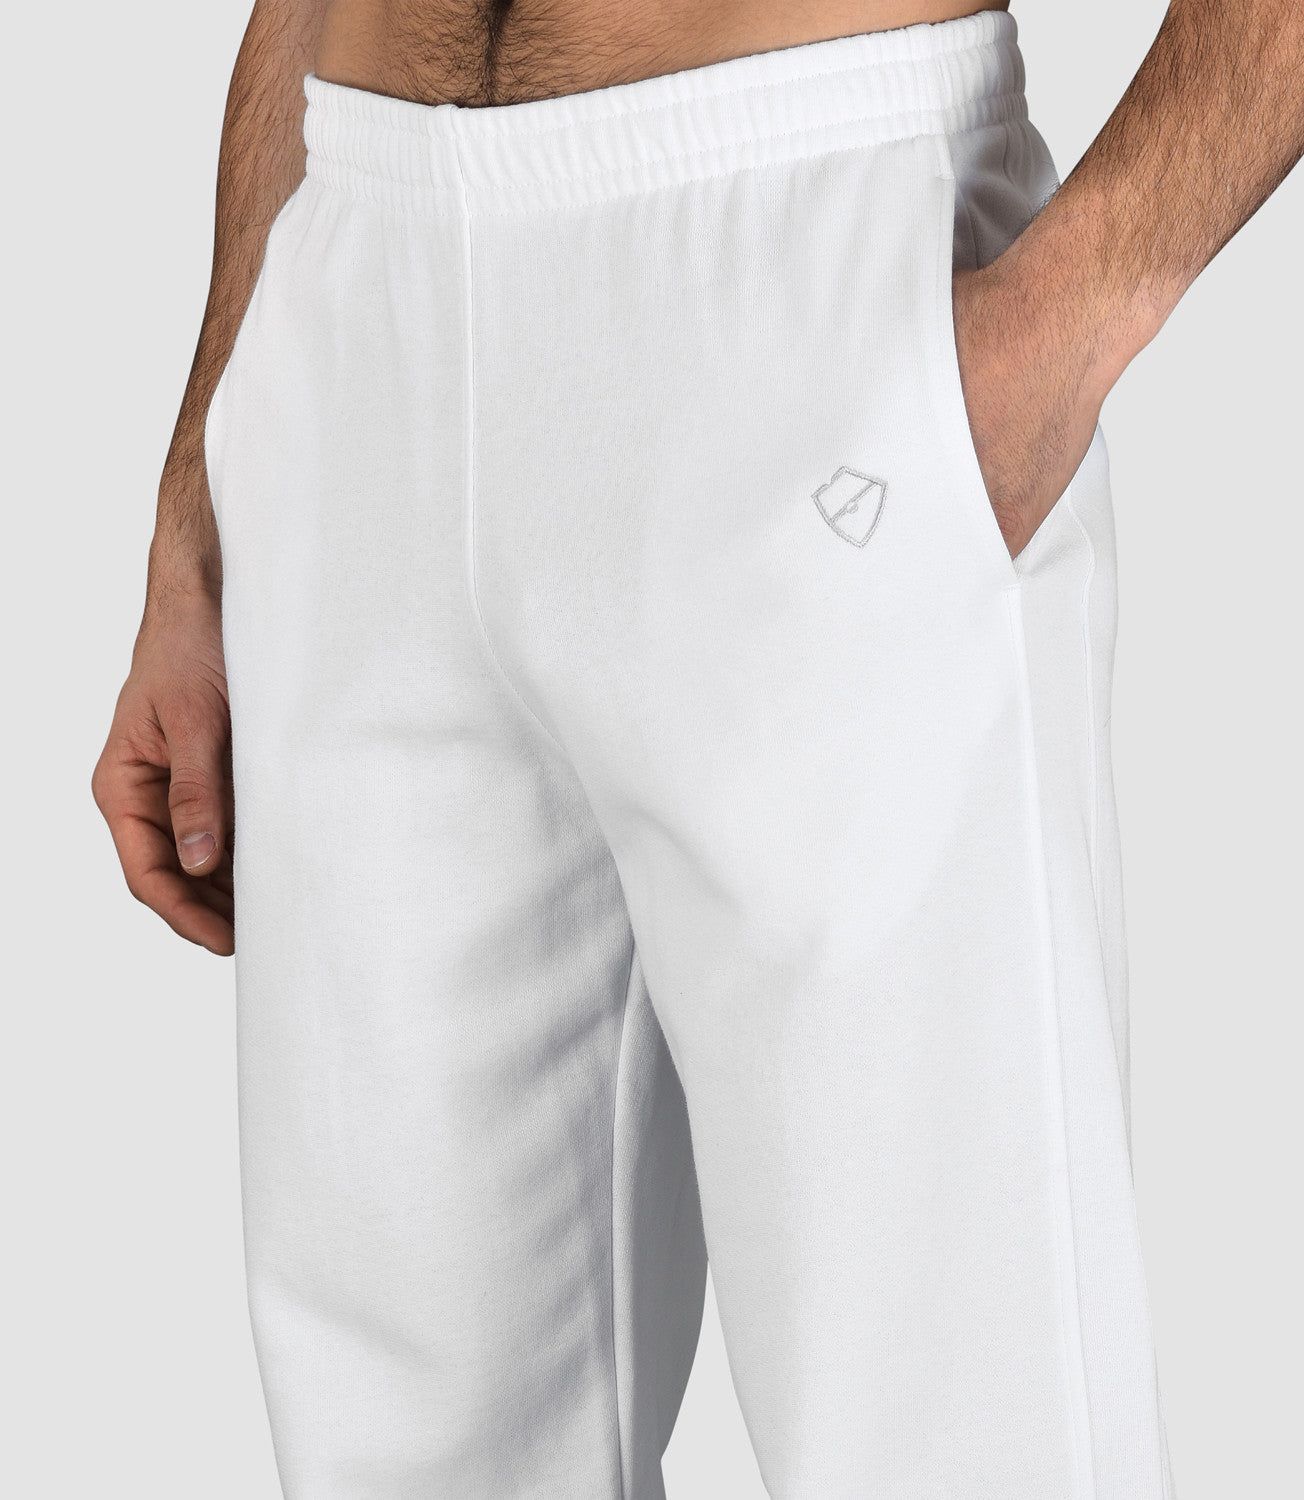 Nike Tennis Pants White - white